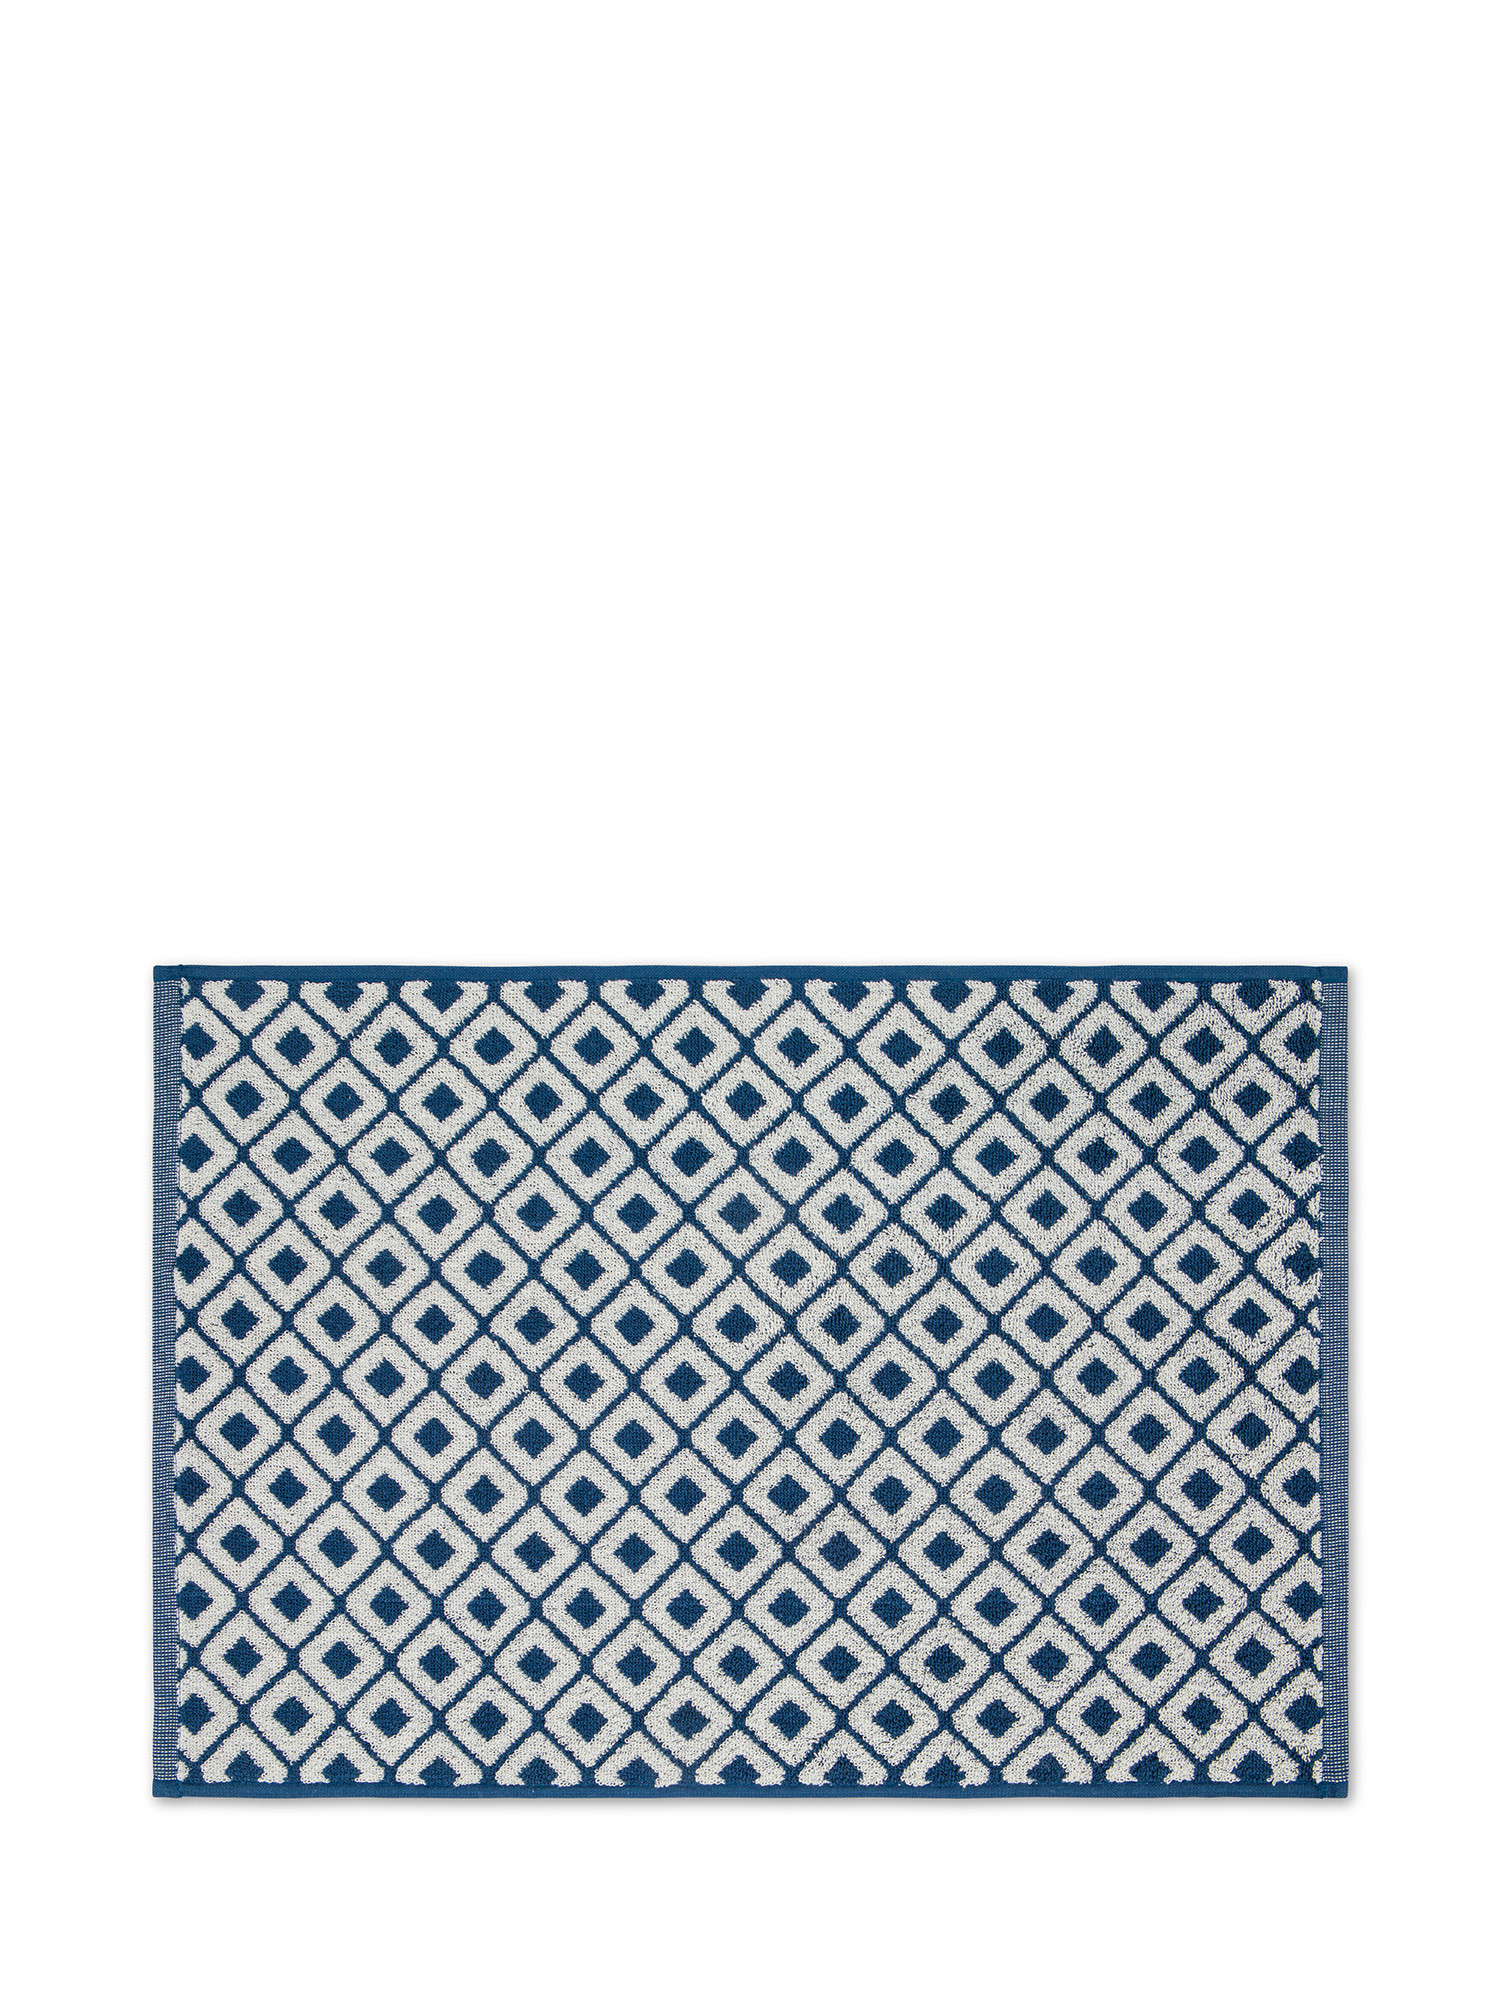 Asciugamano in spugna di cotone motivo quadri, Blu, large image number 1